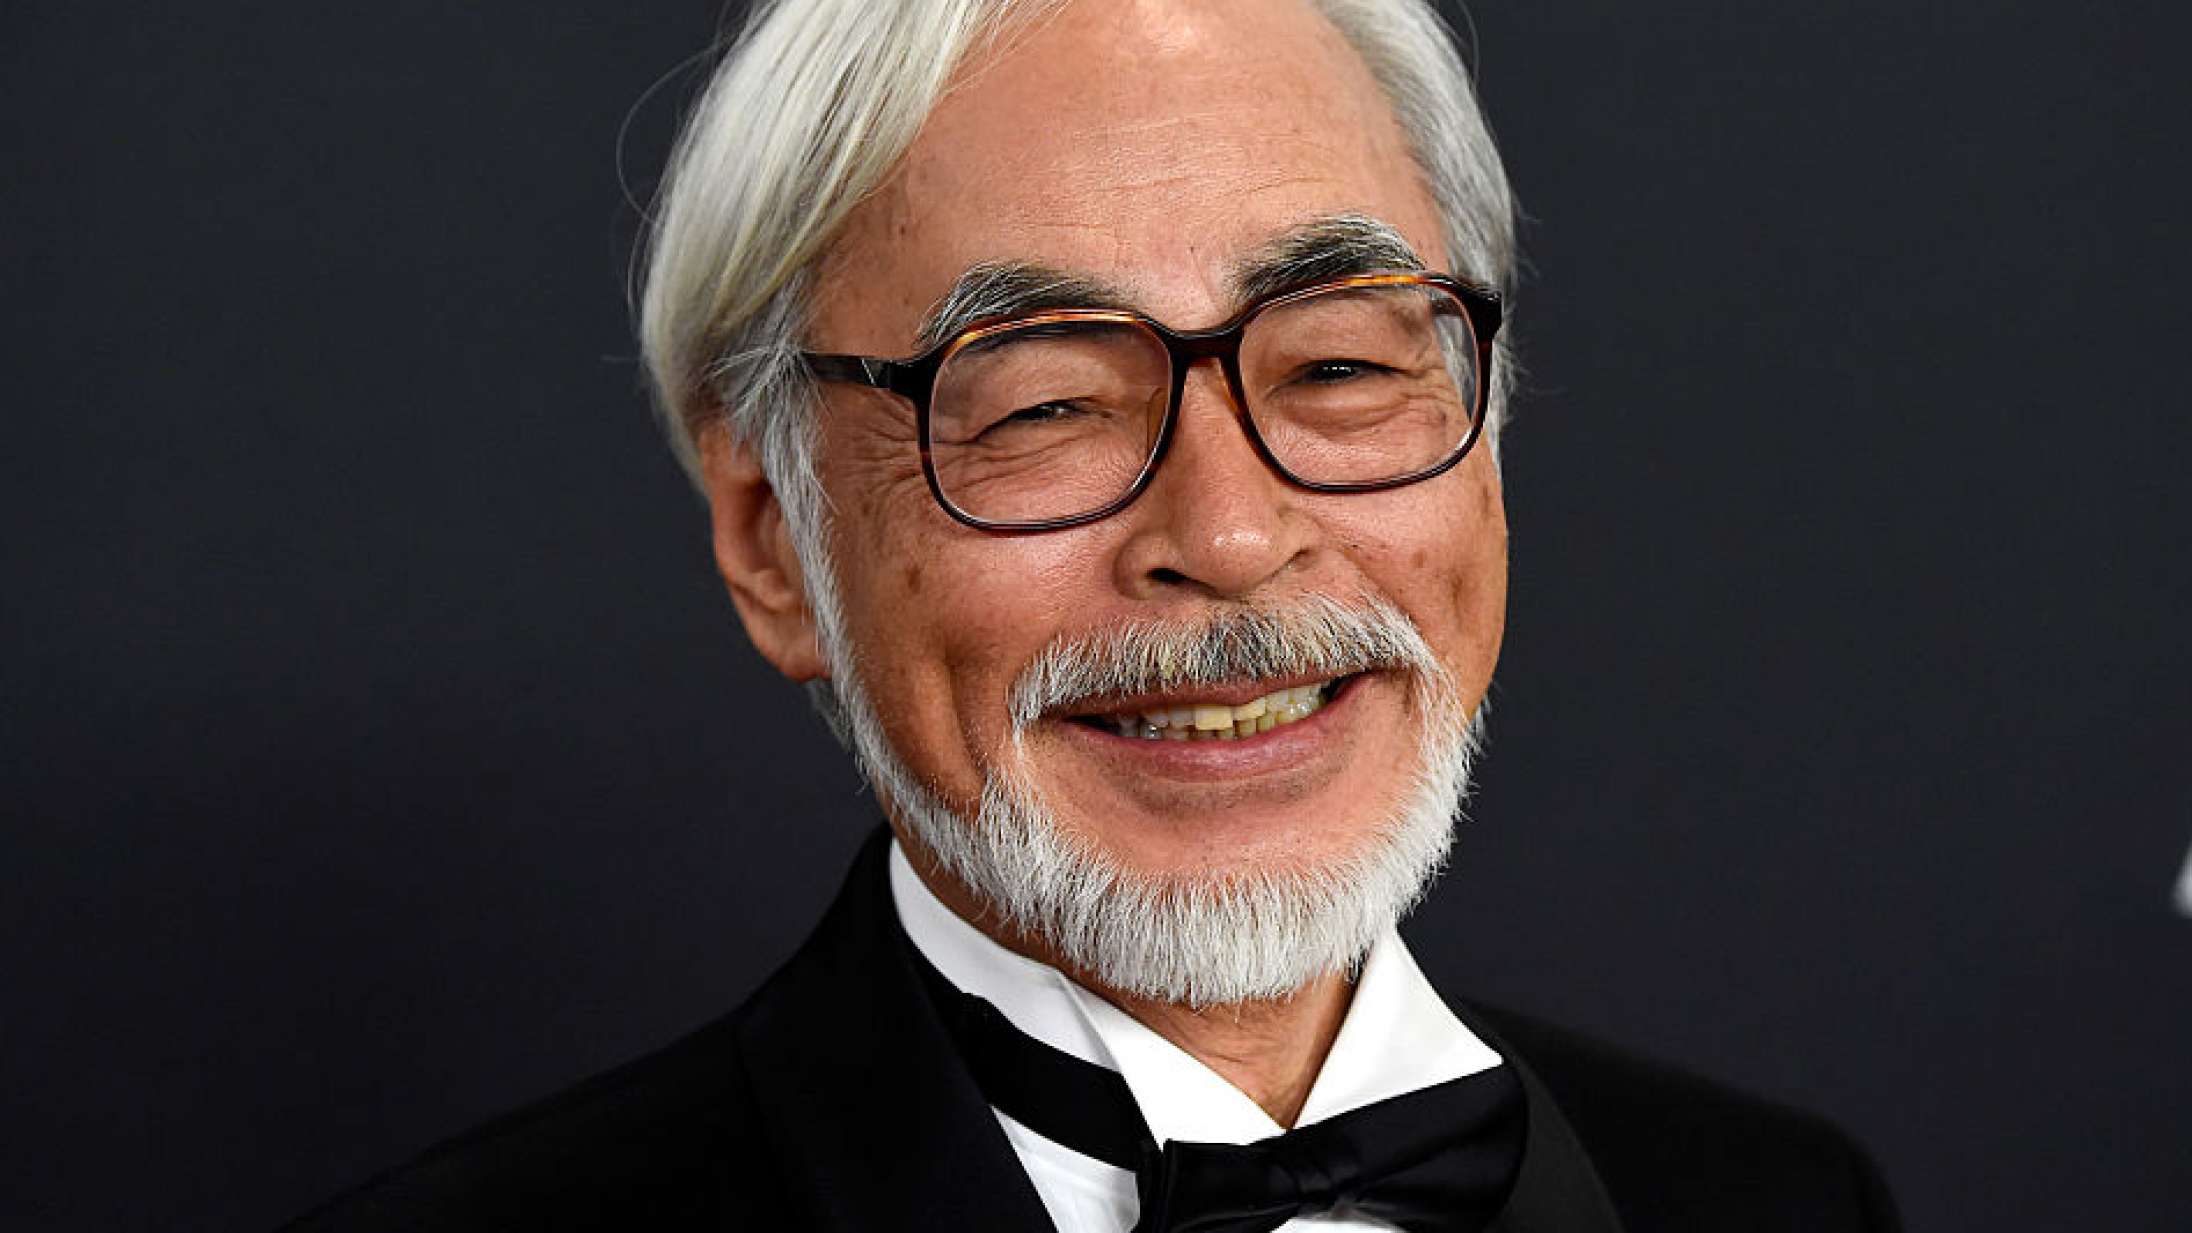 Dokumentar i fire dele om Ghibli-mesteren Hayao Miyazaki kan nu ses gratis